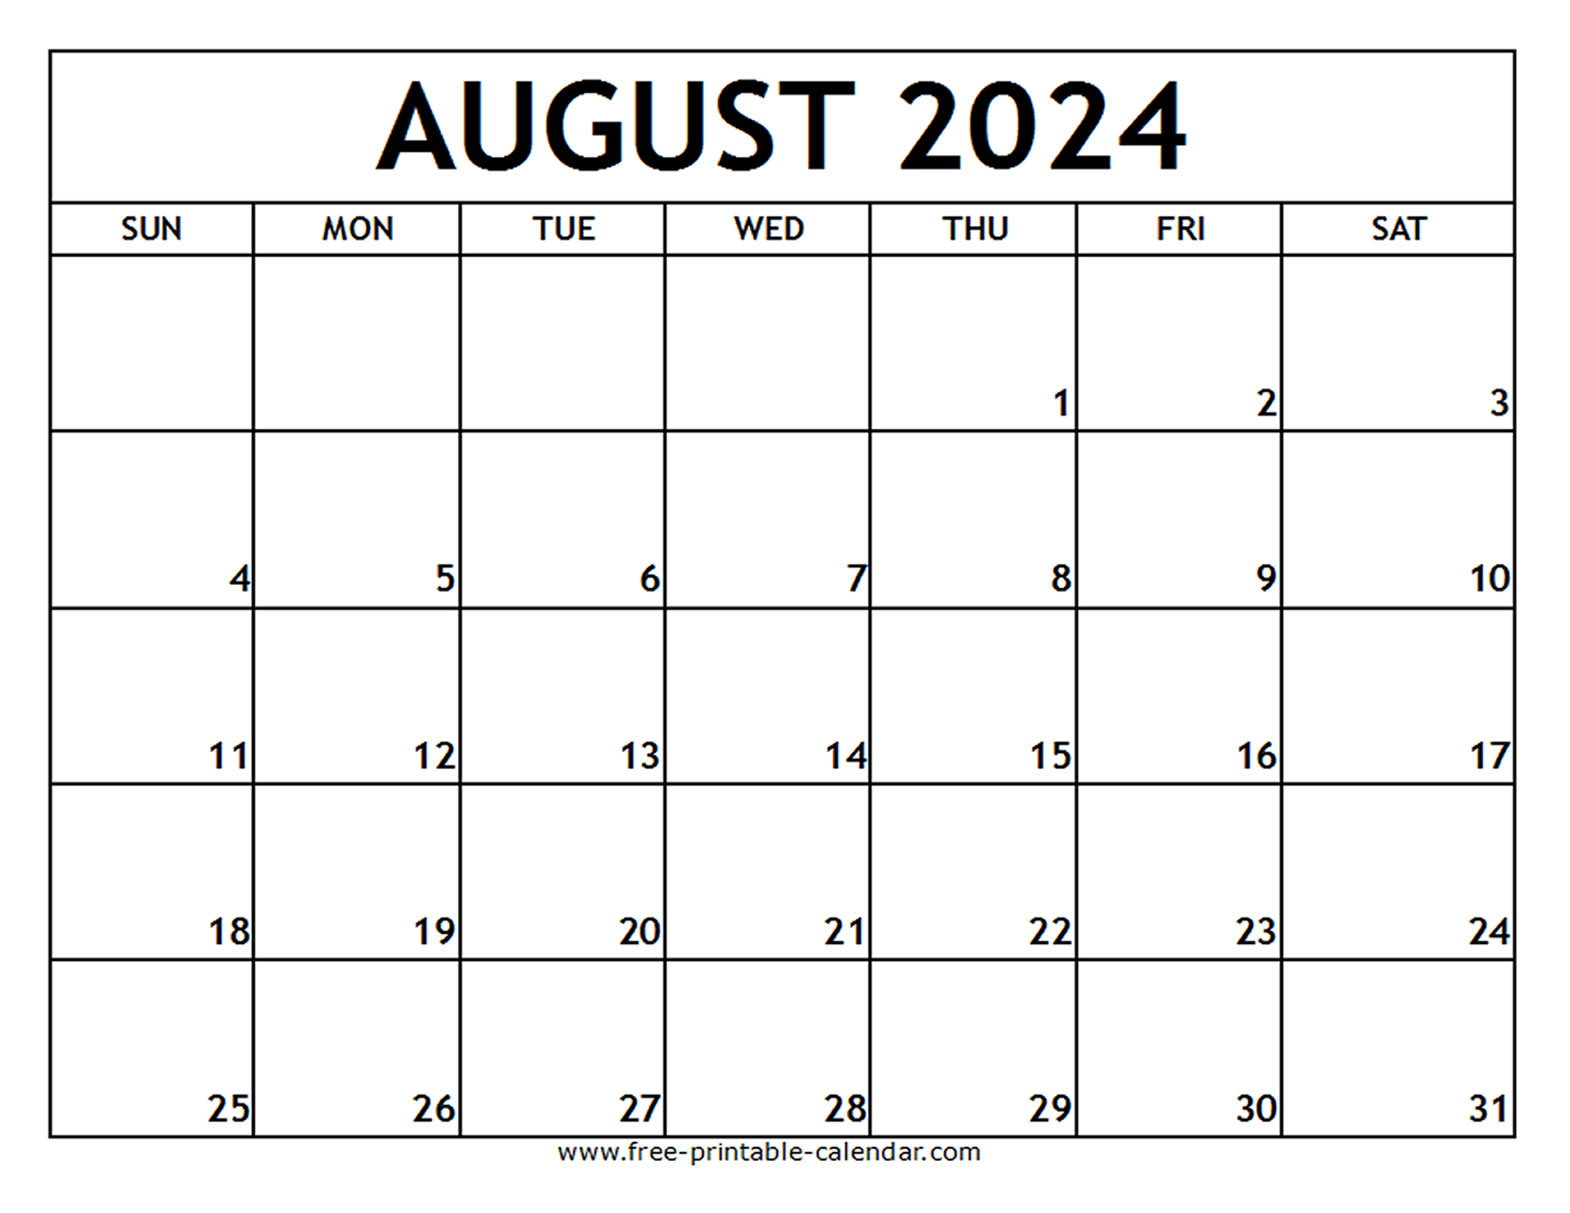 August 2024 Printable Calendar - Free-Printable-Calendar regarding Free Printable August Calendar 2024